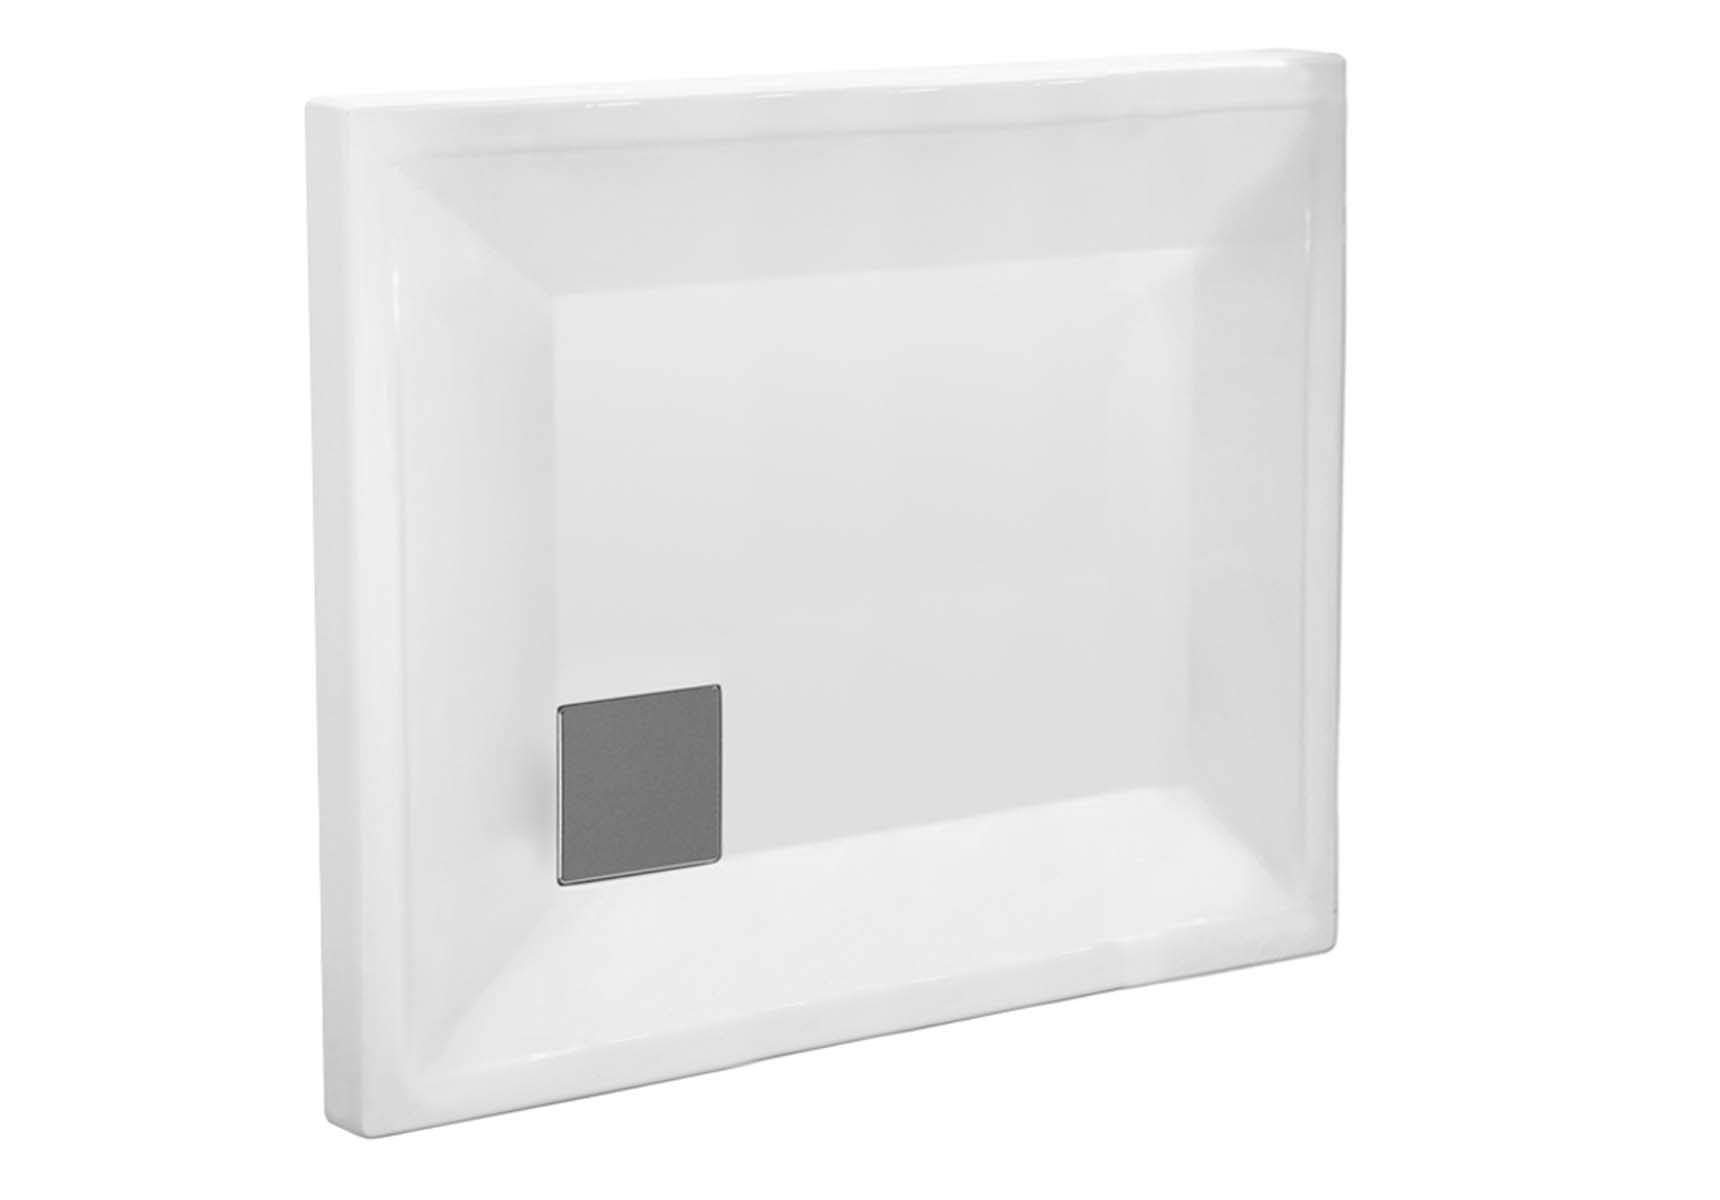 T70 90x70 Square Monoflat Shower Tray